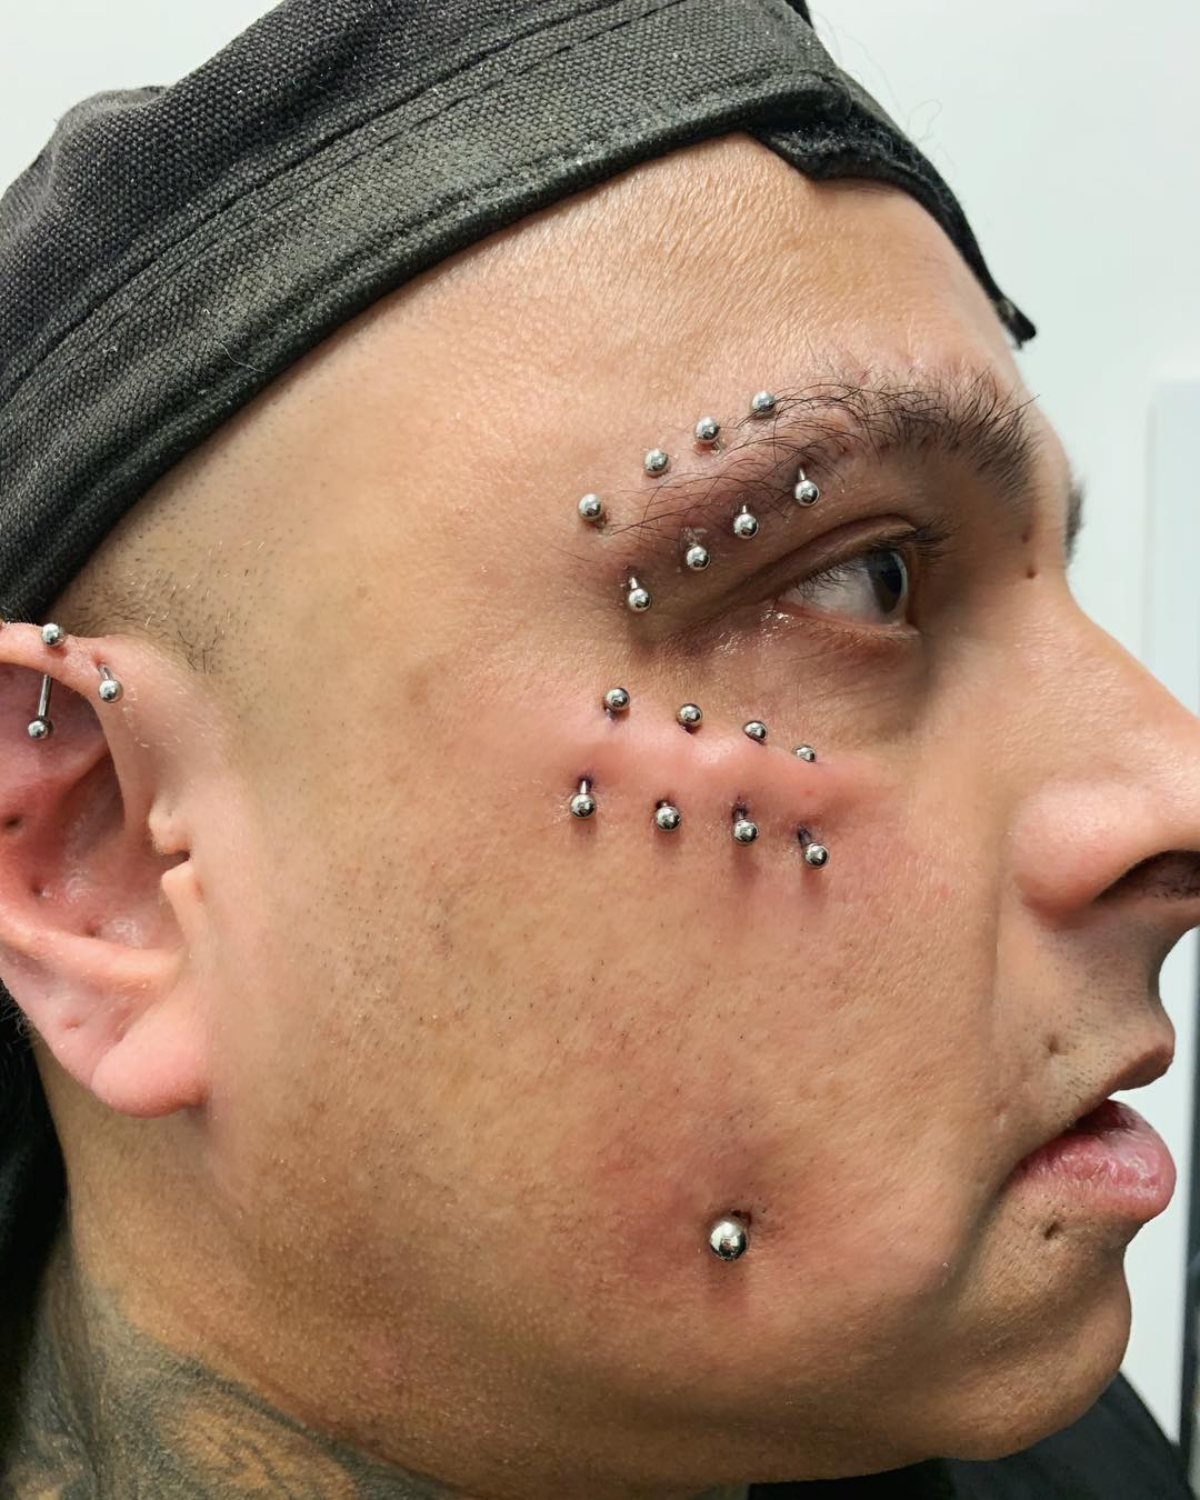 13 multiple anti eyebrow piercings at once